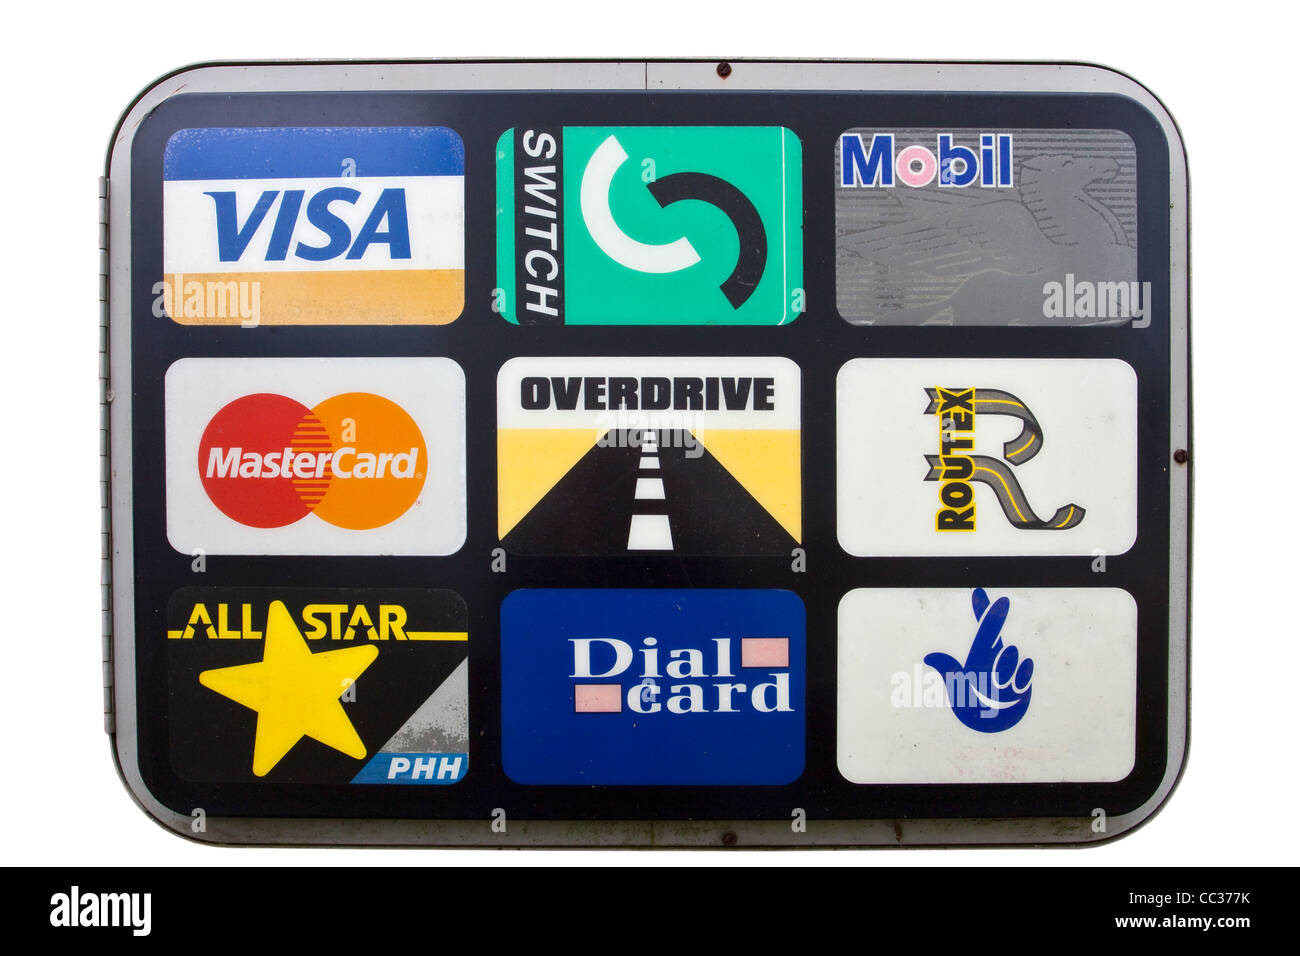 Alte Garage Kreditkarte Sign Visum Schalter Mobil Mastercard overdrive Routex alle Sterne Zifferblatt-Card-Lotterie Stockfoto